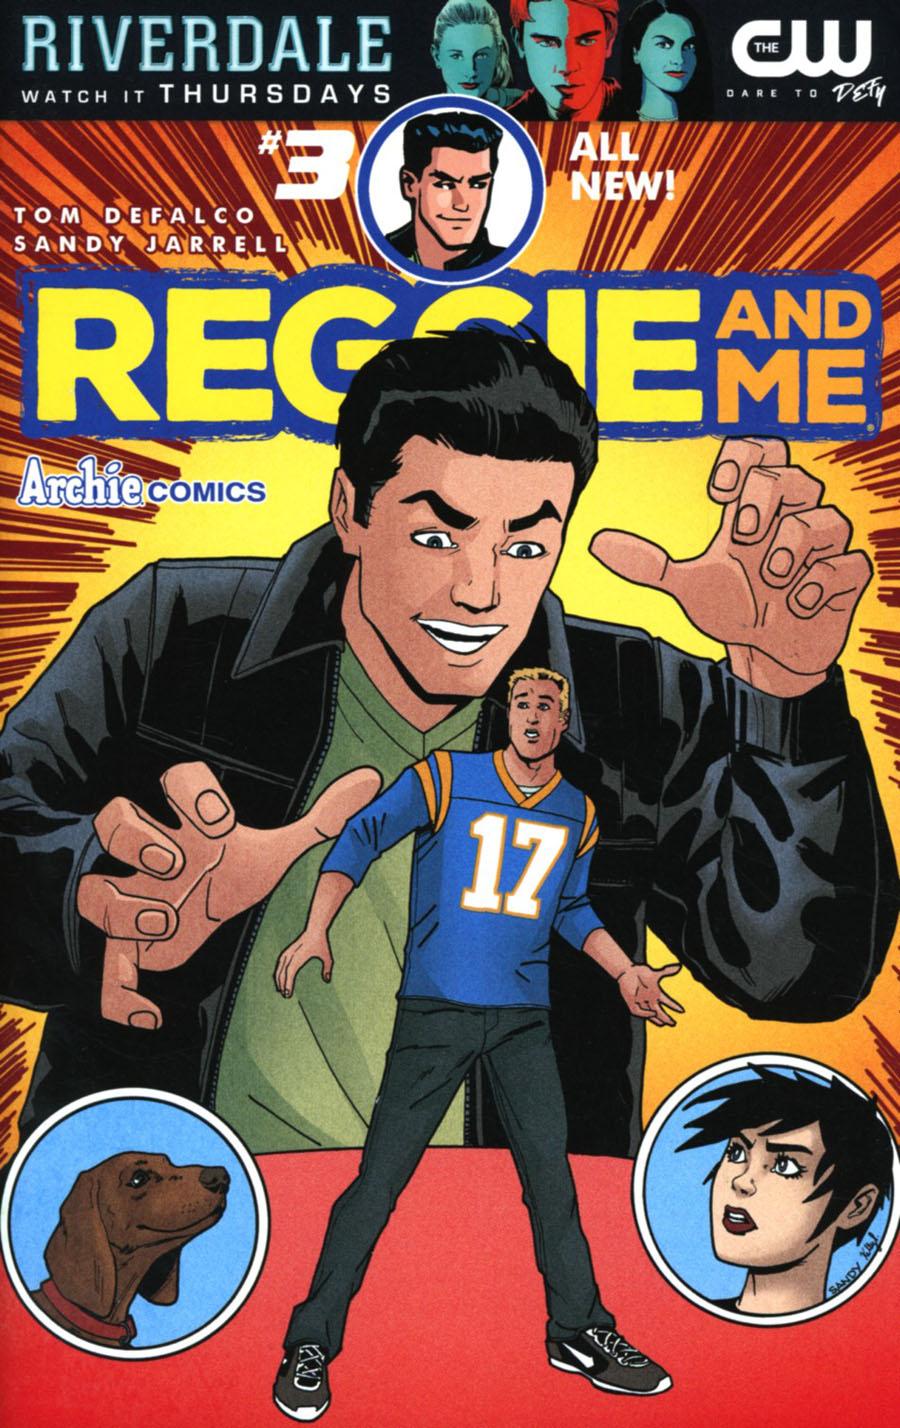 Reggie And Me Vol. 2 #3